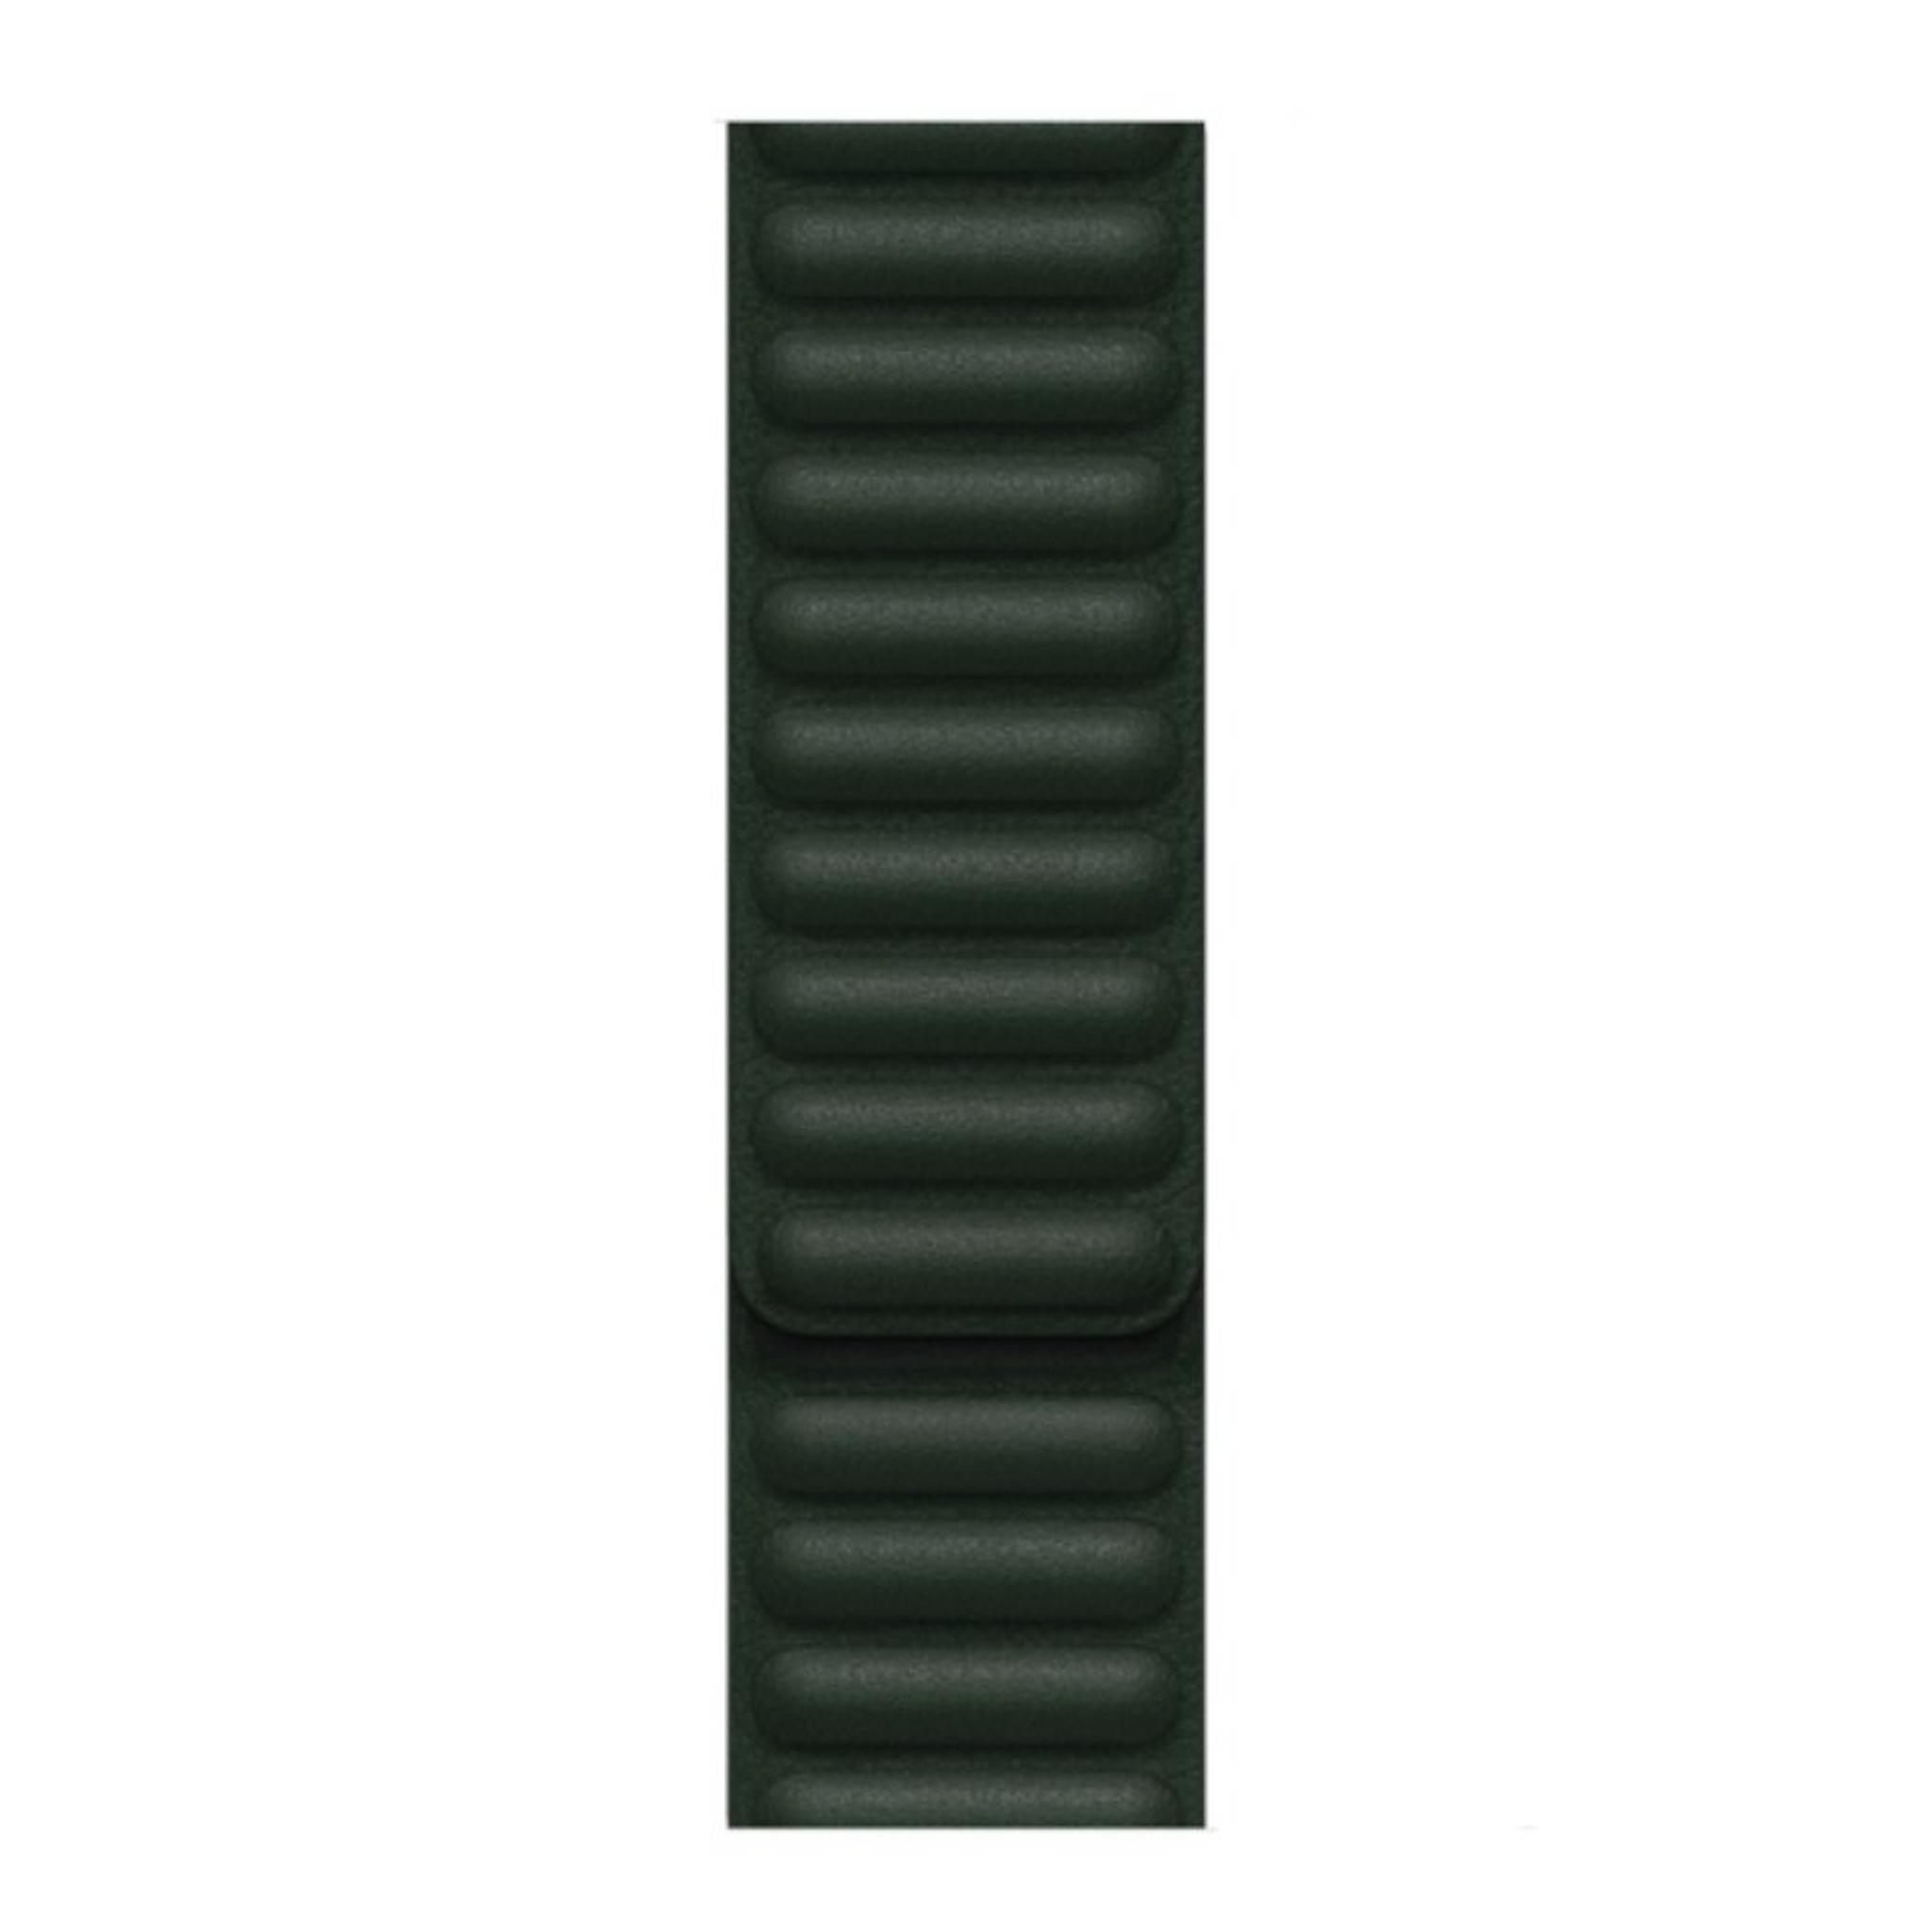 Apple Leather Link Bracelet 41mm - Sequoia Green S/M